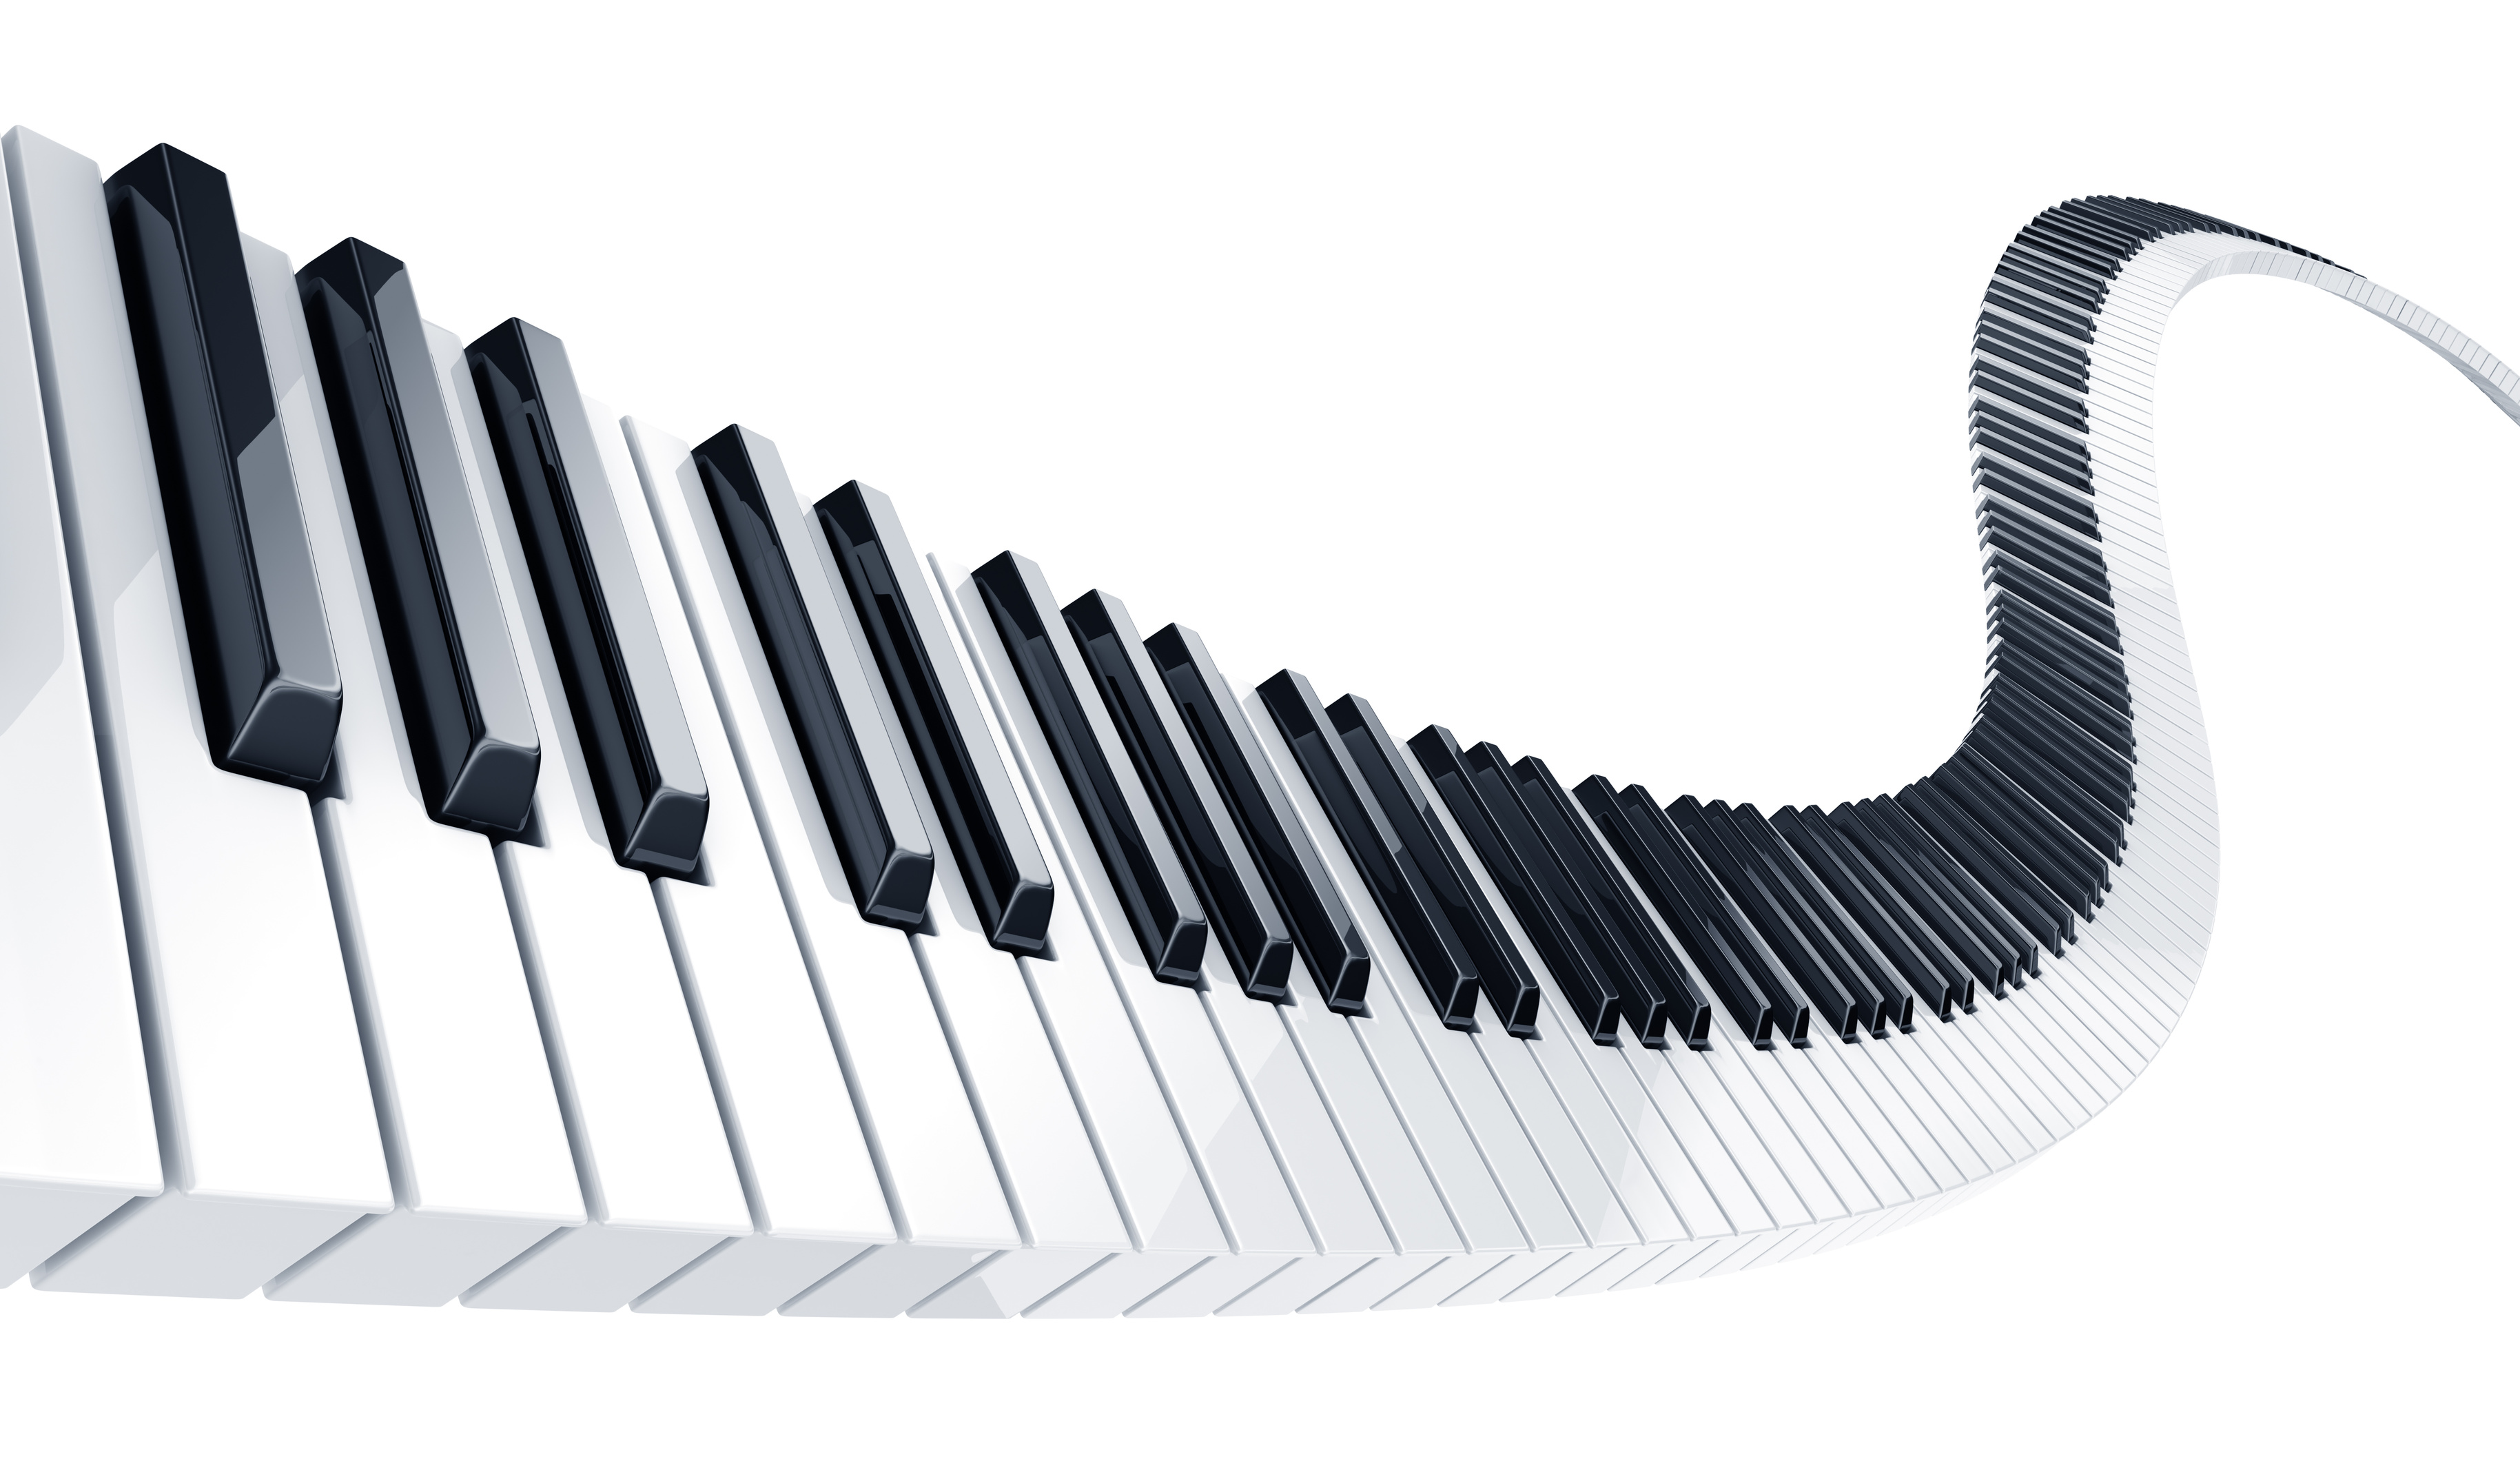 Free Piano Keys Png, Download Free Piano Keys Png png images, Free